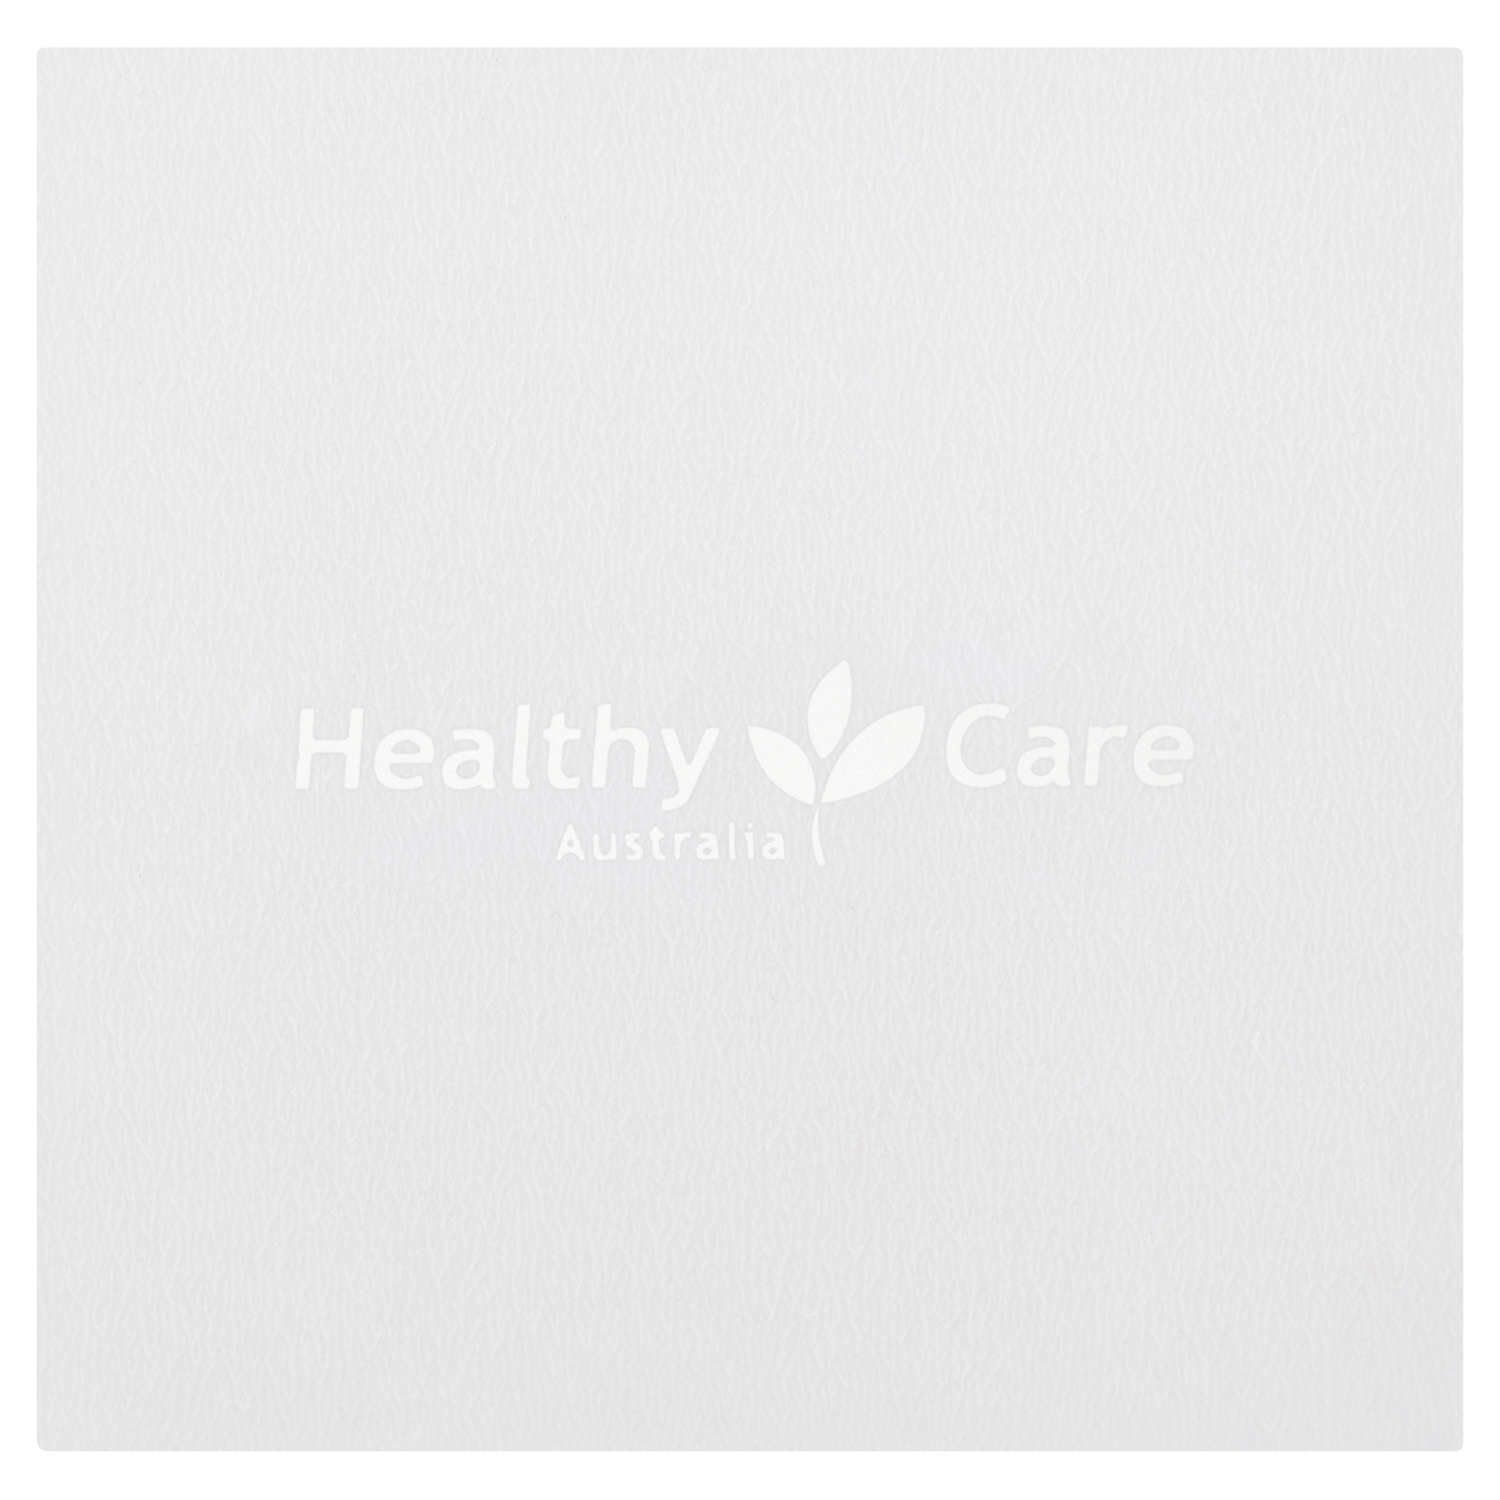 Healthy Care Australia Logo in gray background